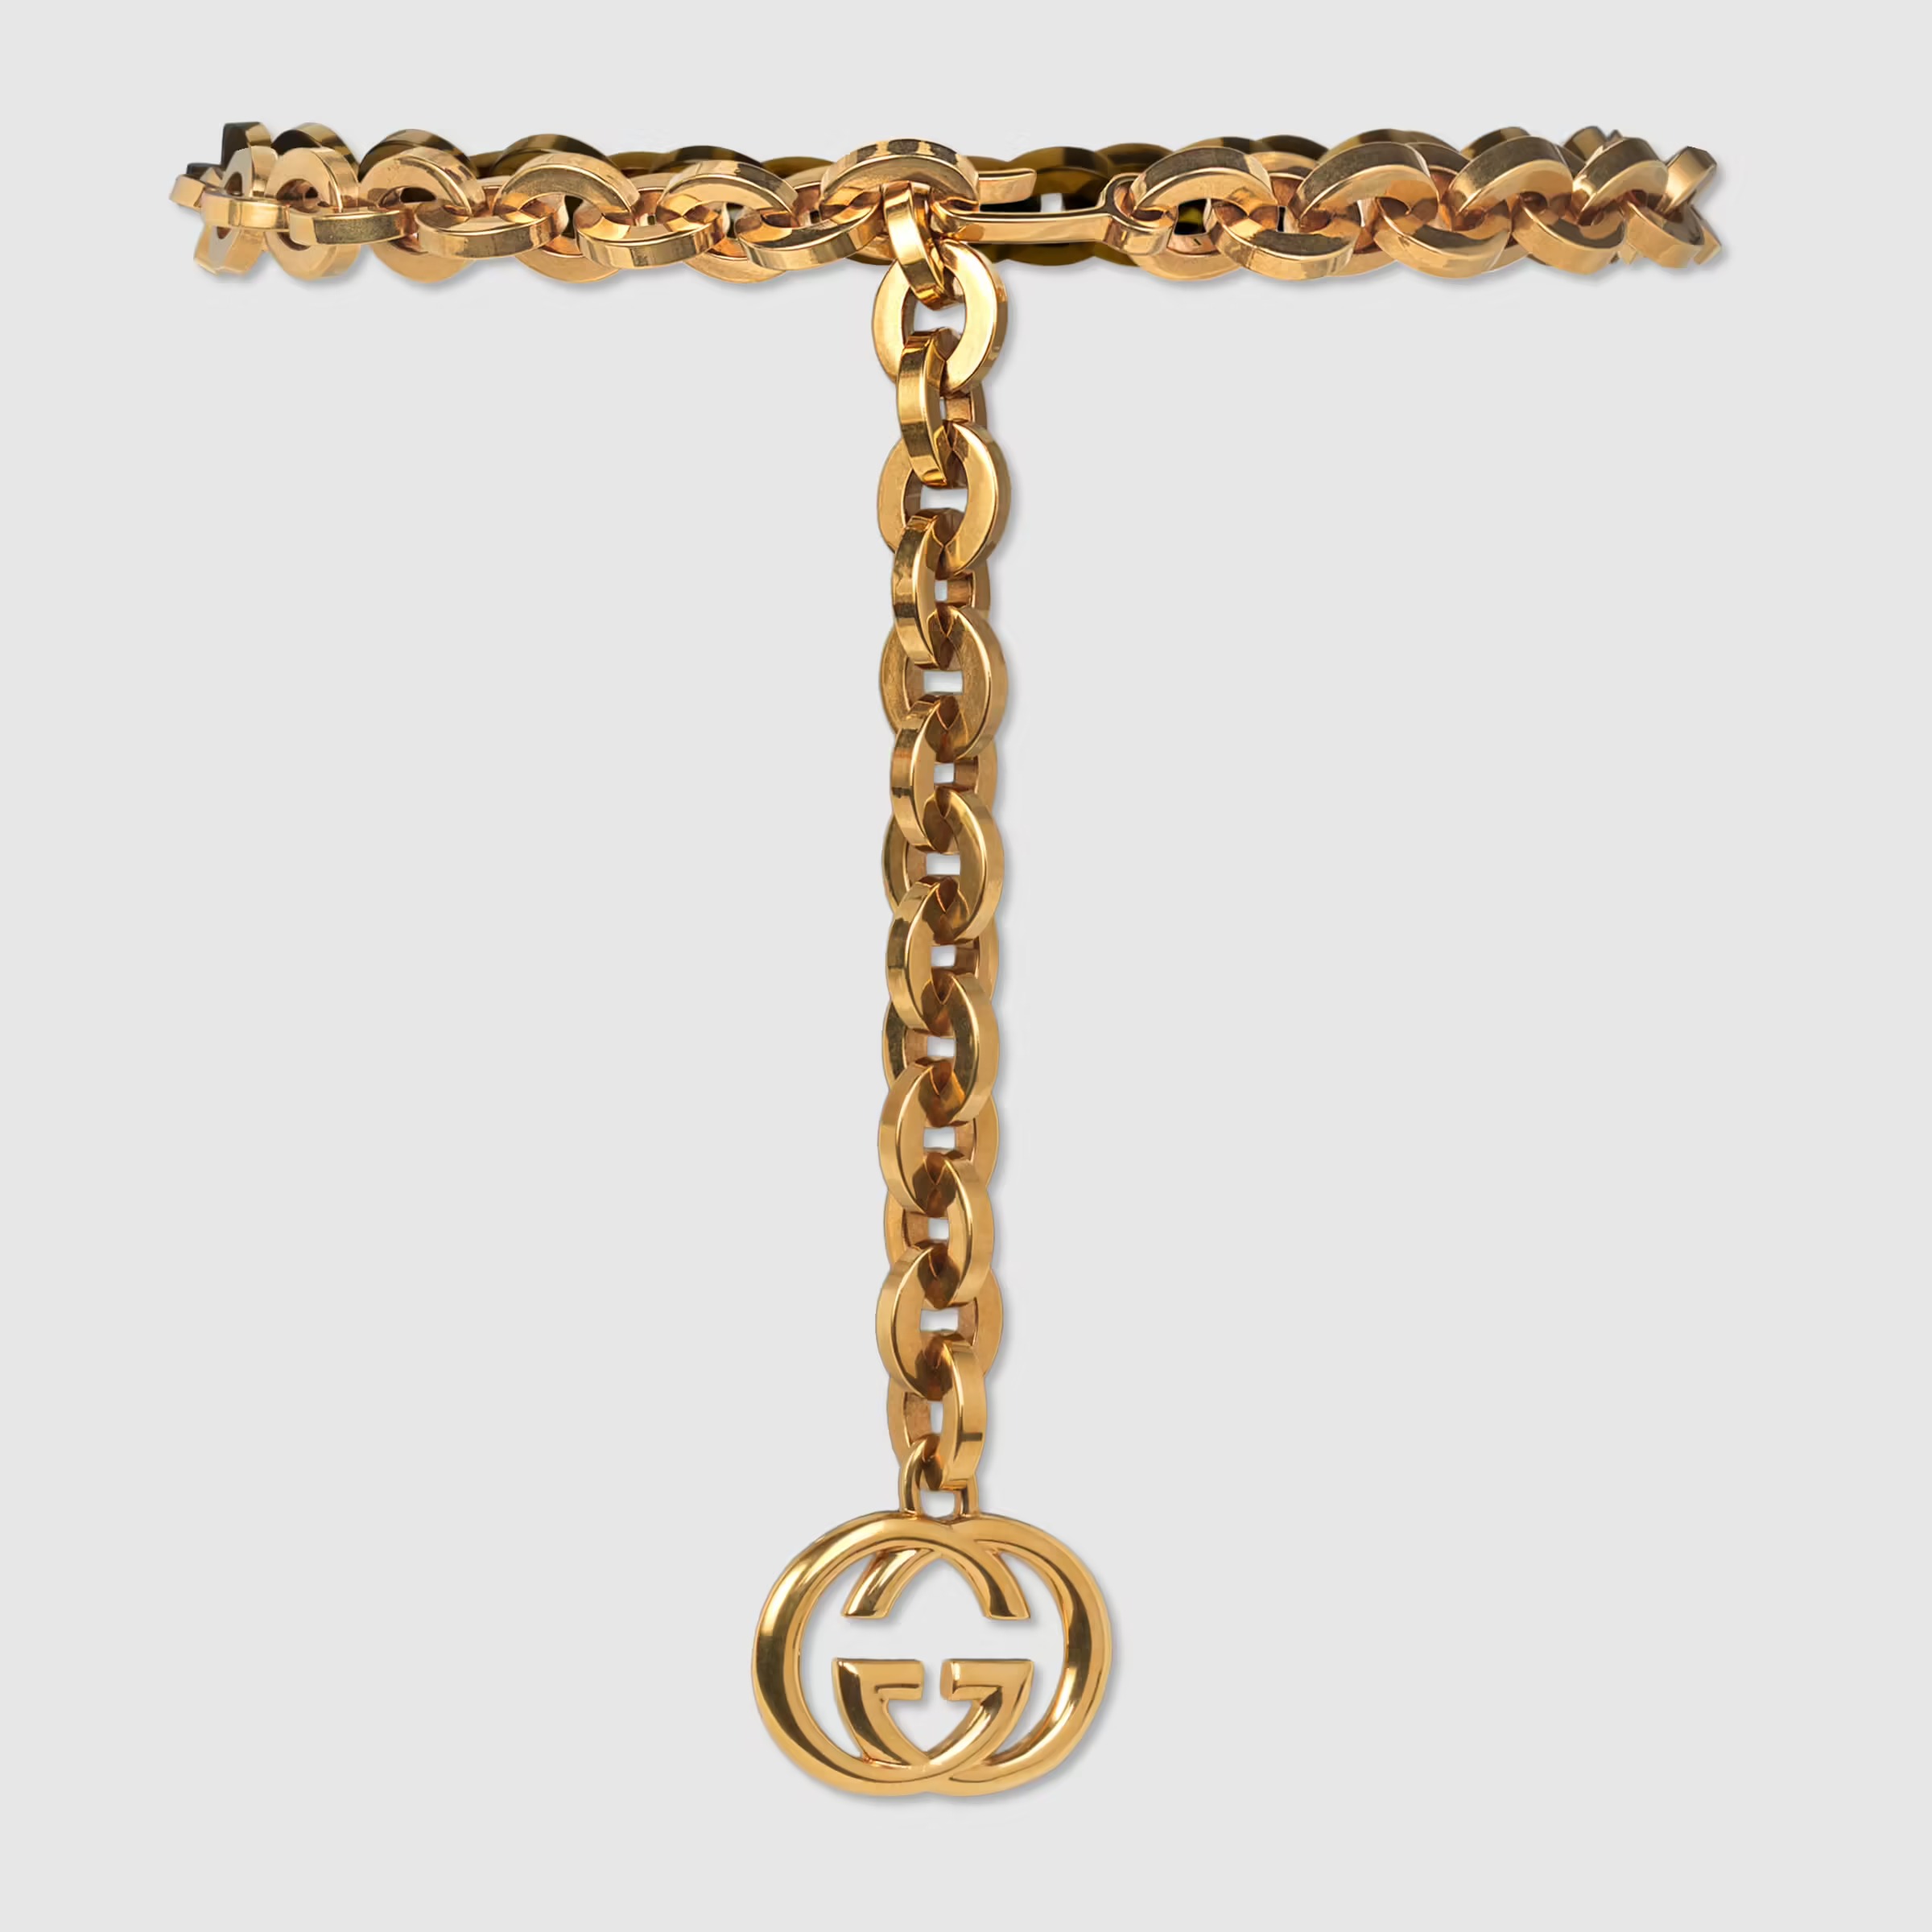 Gucci Chain Belt with Interlocking G Charm